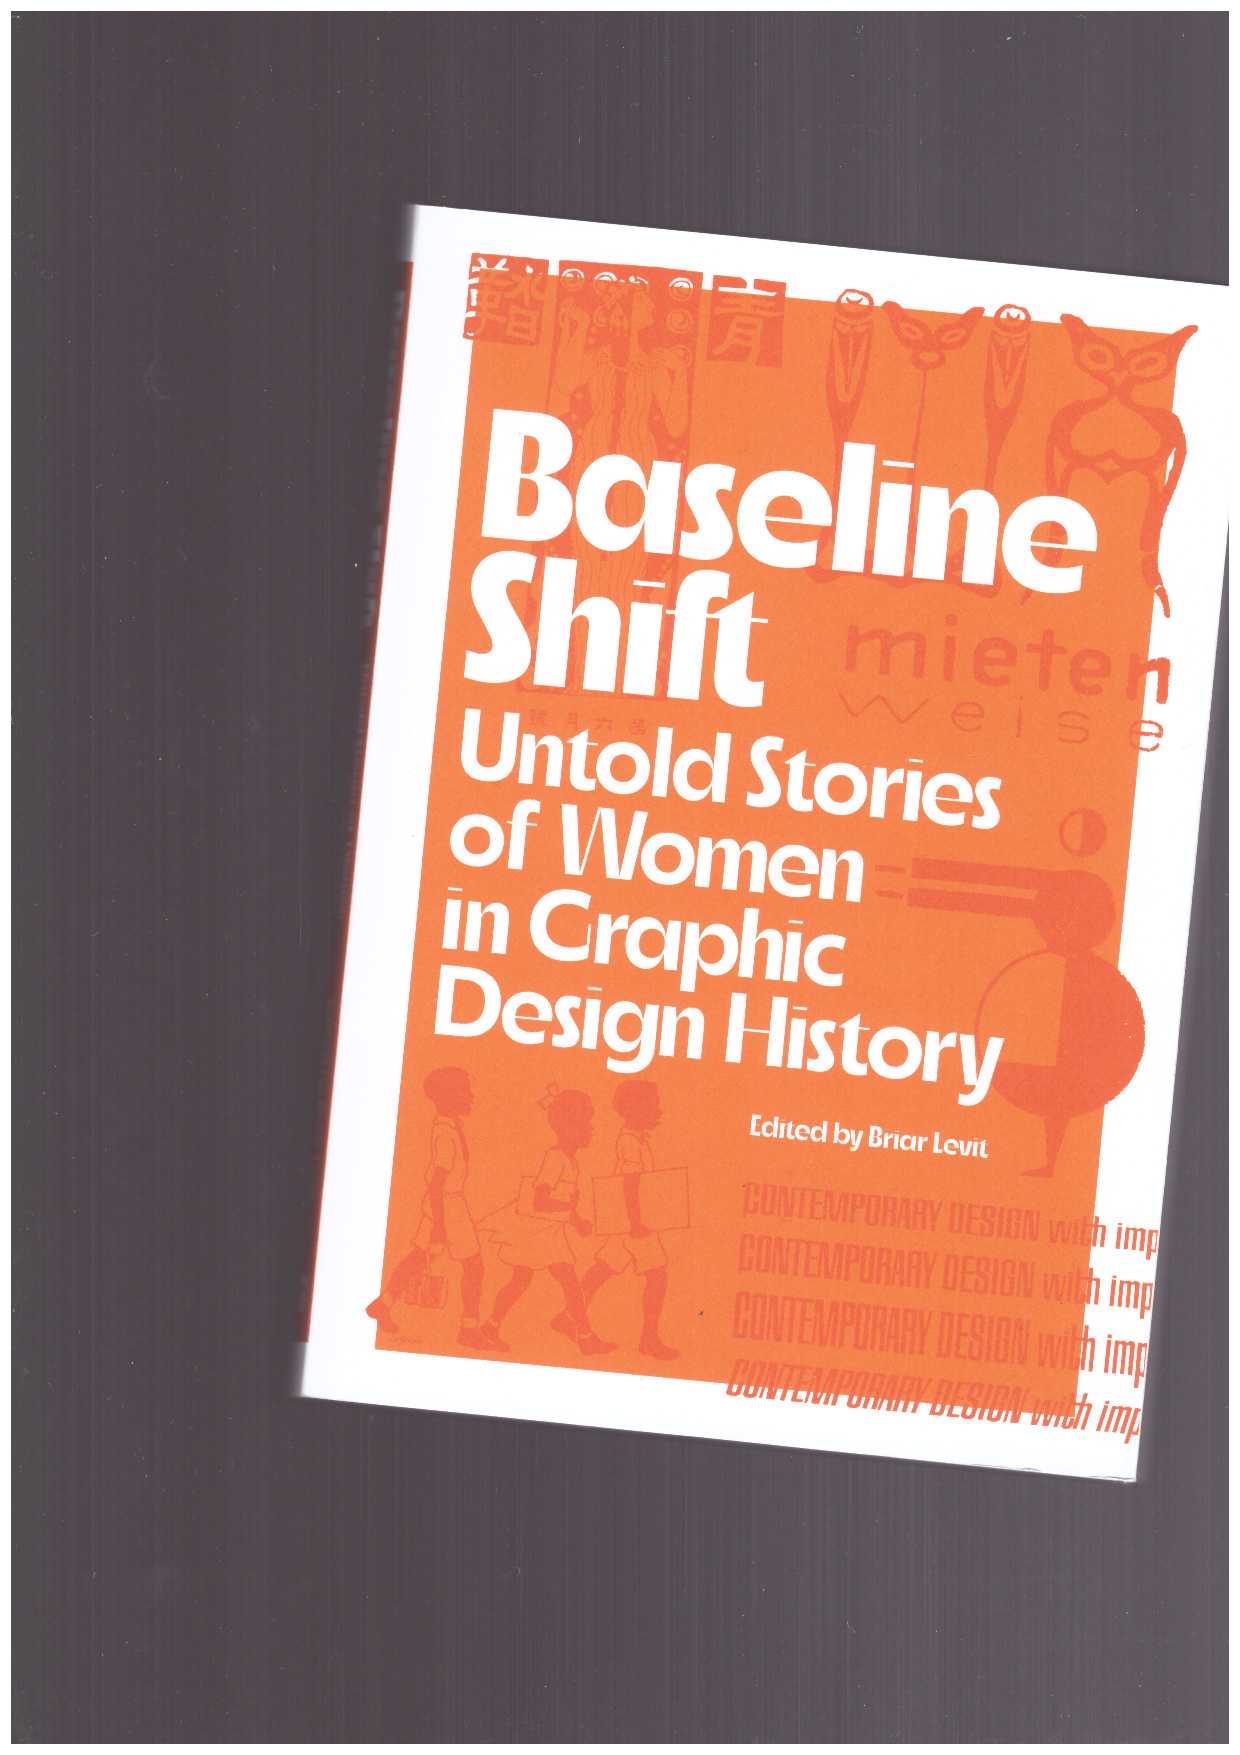  LEVIT, Briar (ed.) - Baseline Shift: Untold Stories of Women in Graphic Design History